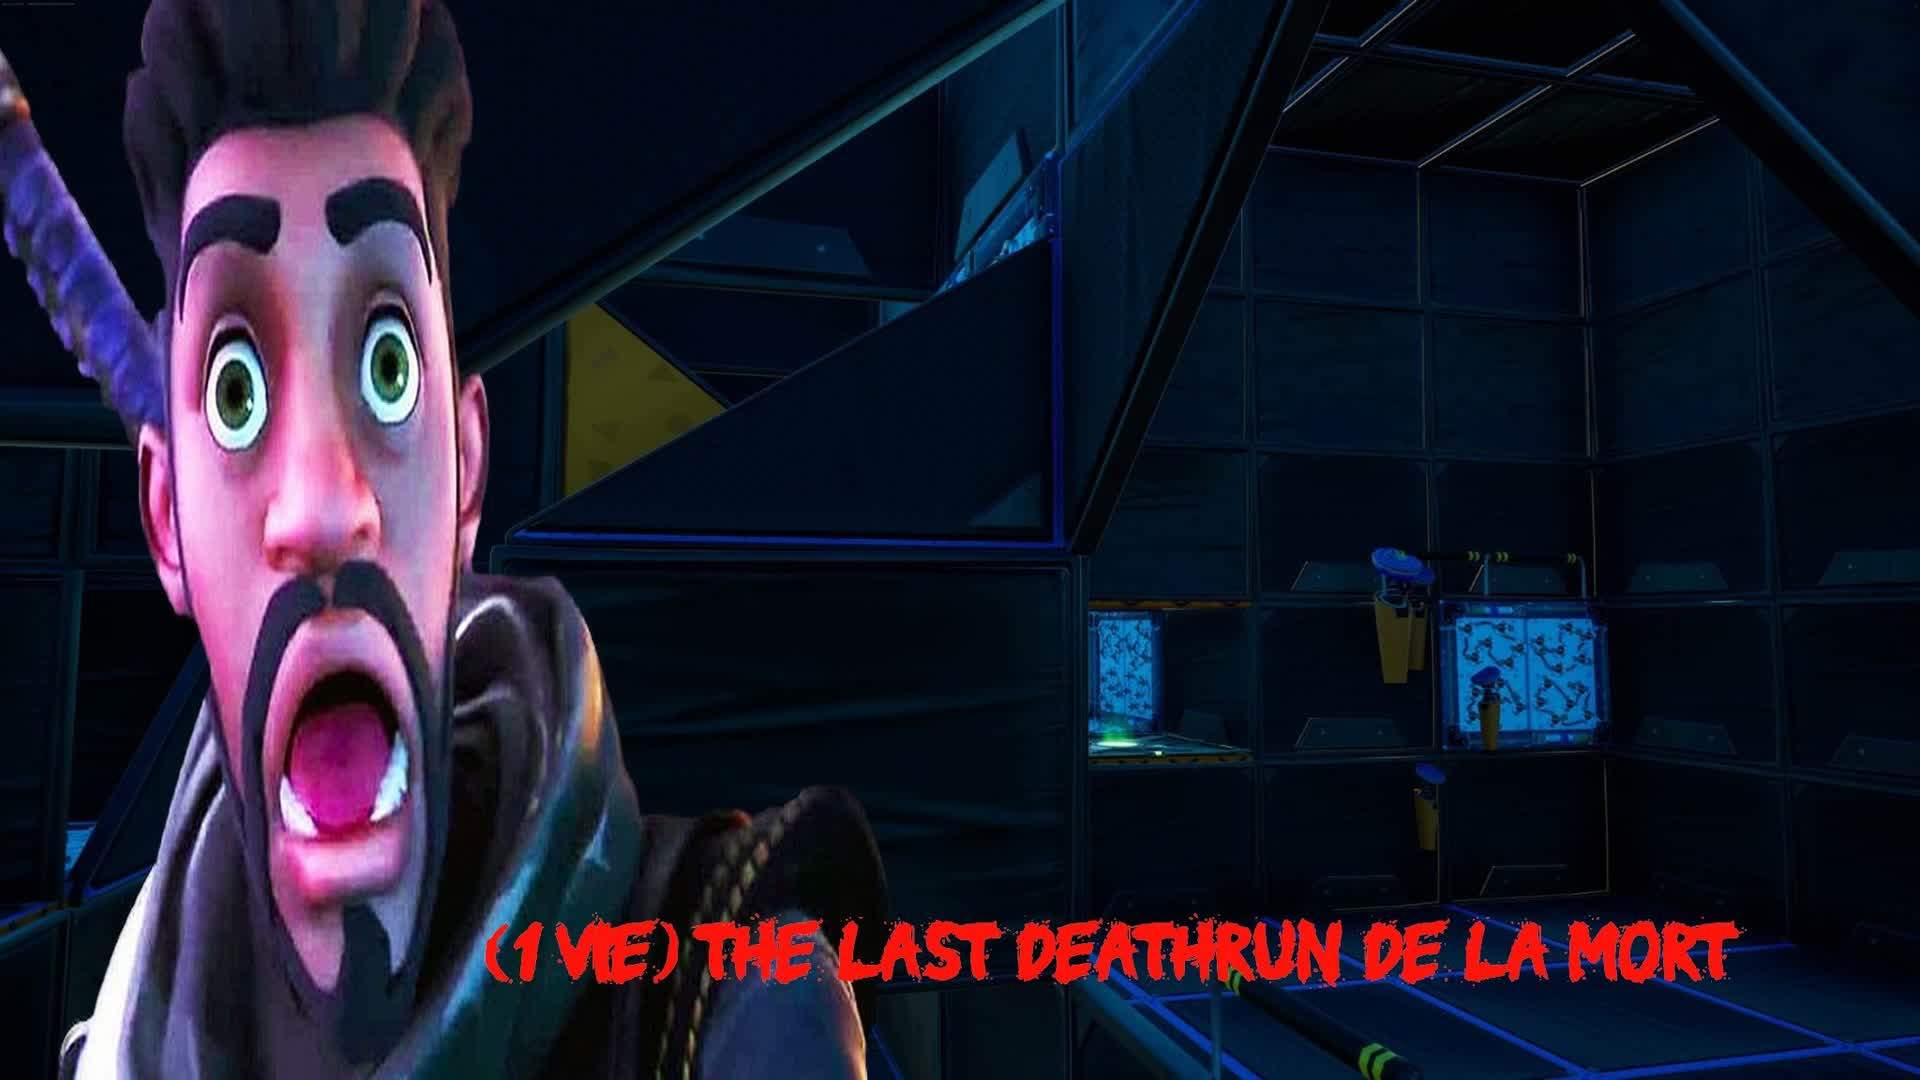 (1 VIE) the last deathrun de la mort